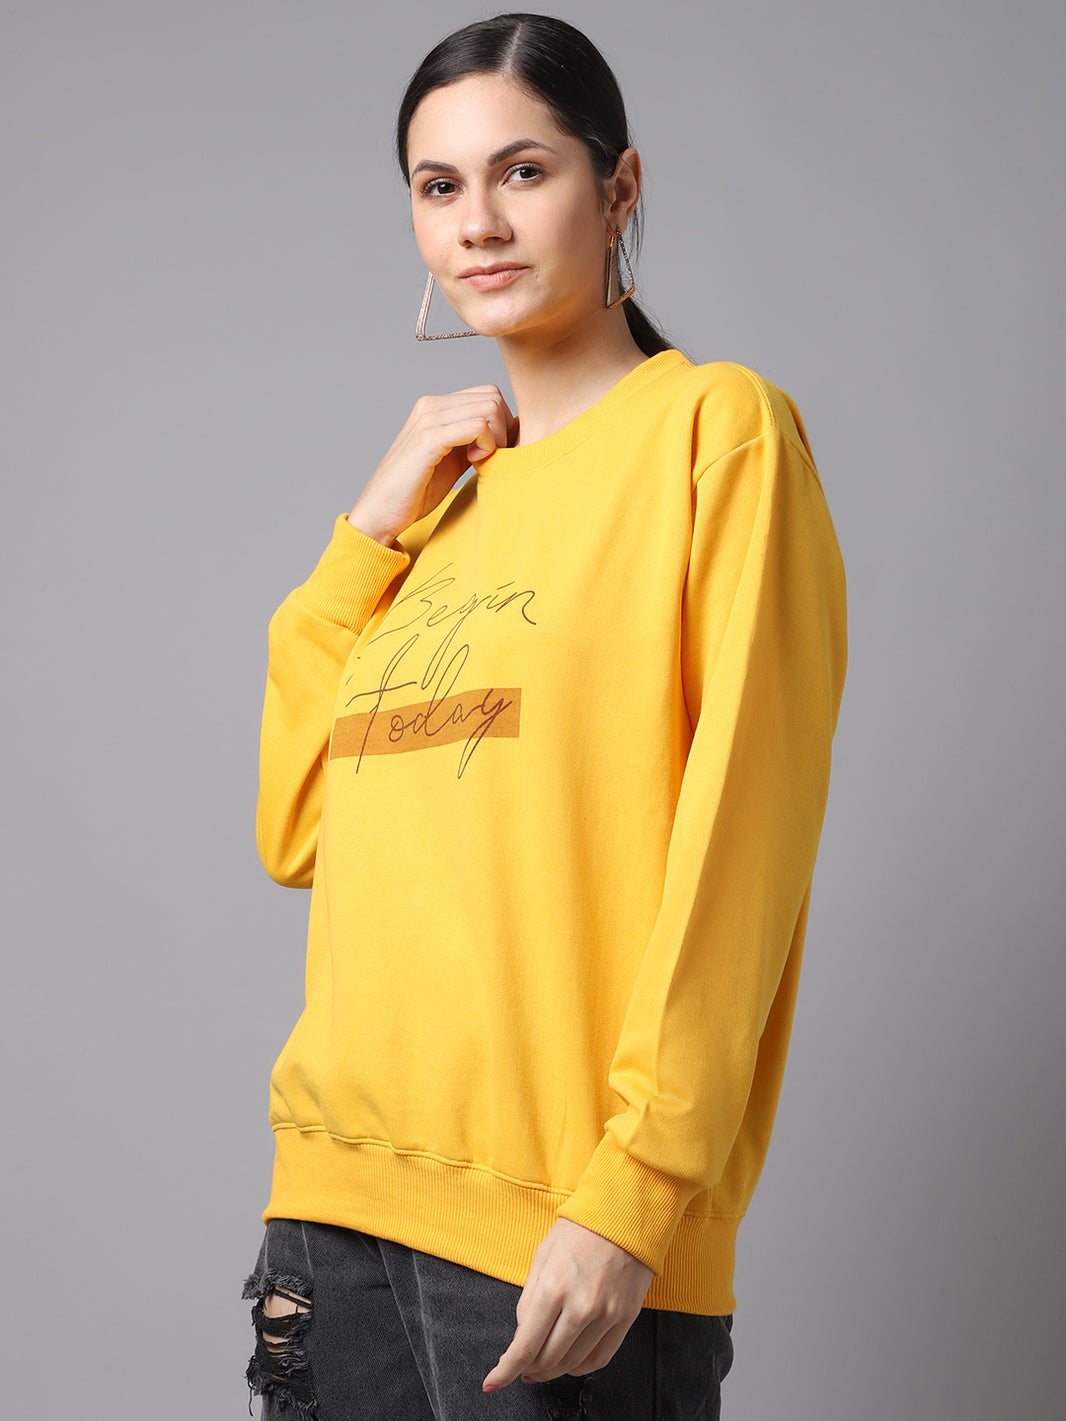 Vimal Jonney Fleece Round Neck Printed Sweatshirt For Women